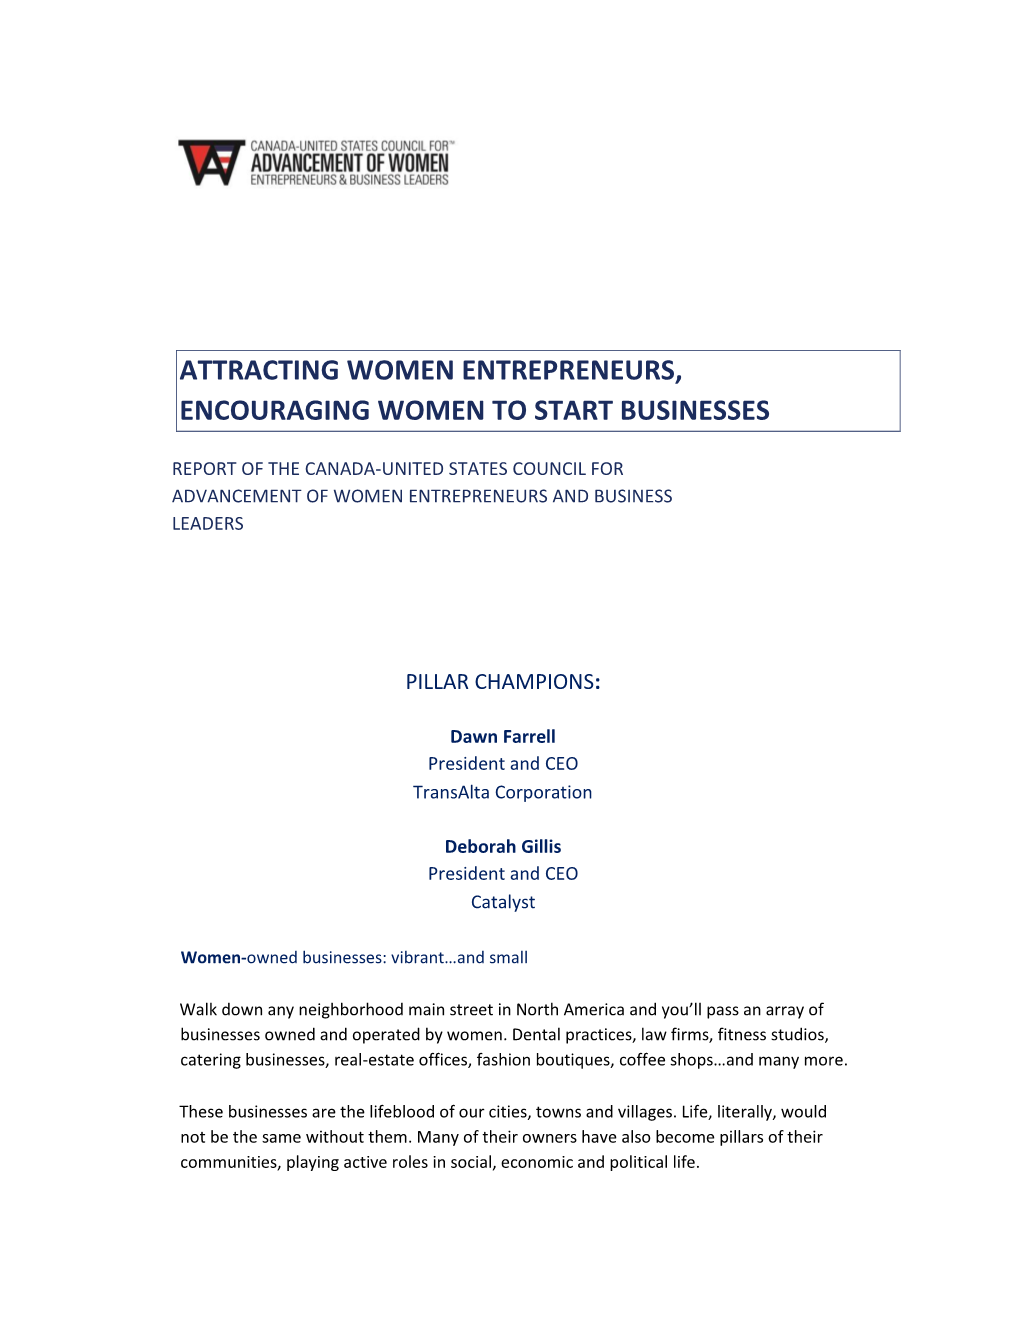 Attracting Women Entrepreneurs, Encouraging Women to Start Businesses